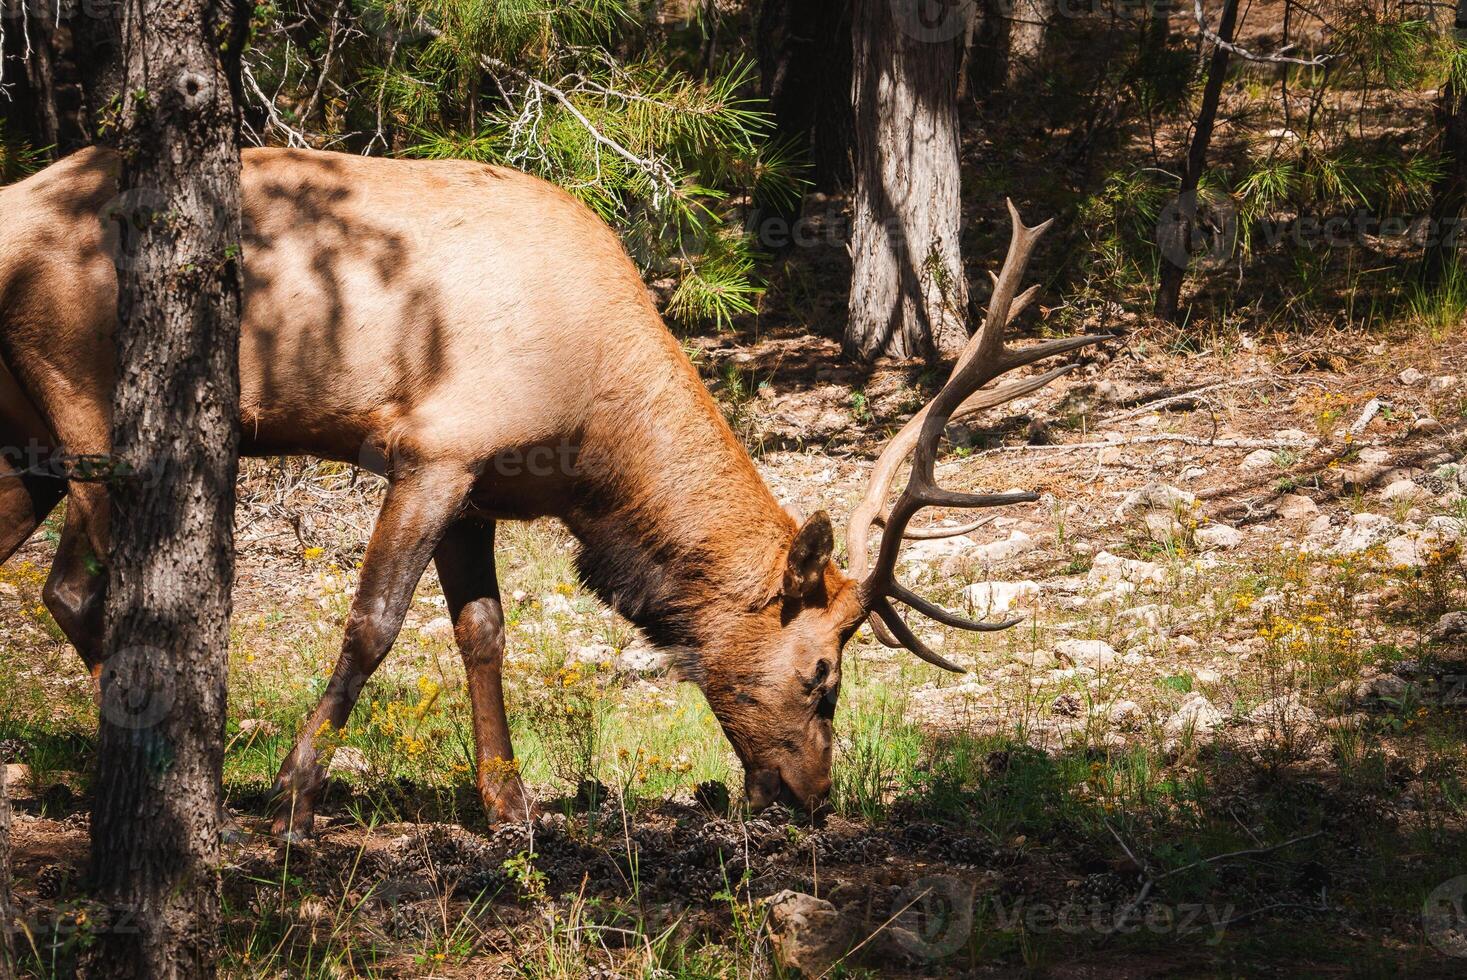 älg med imponerande horn betning i skog livsmiljö, norr Amerika foto